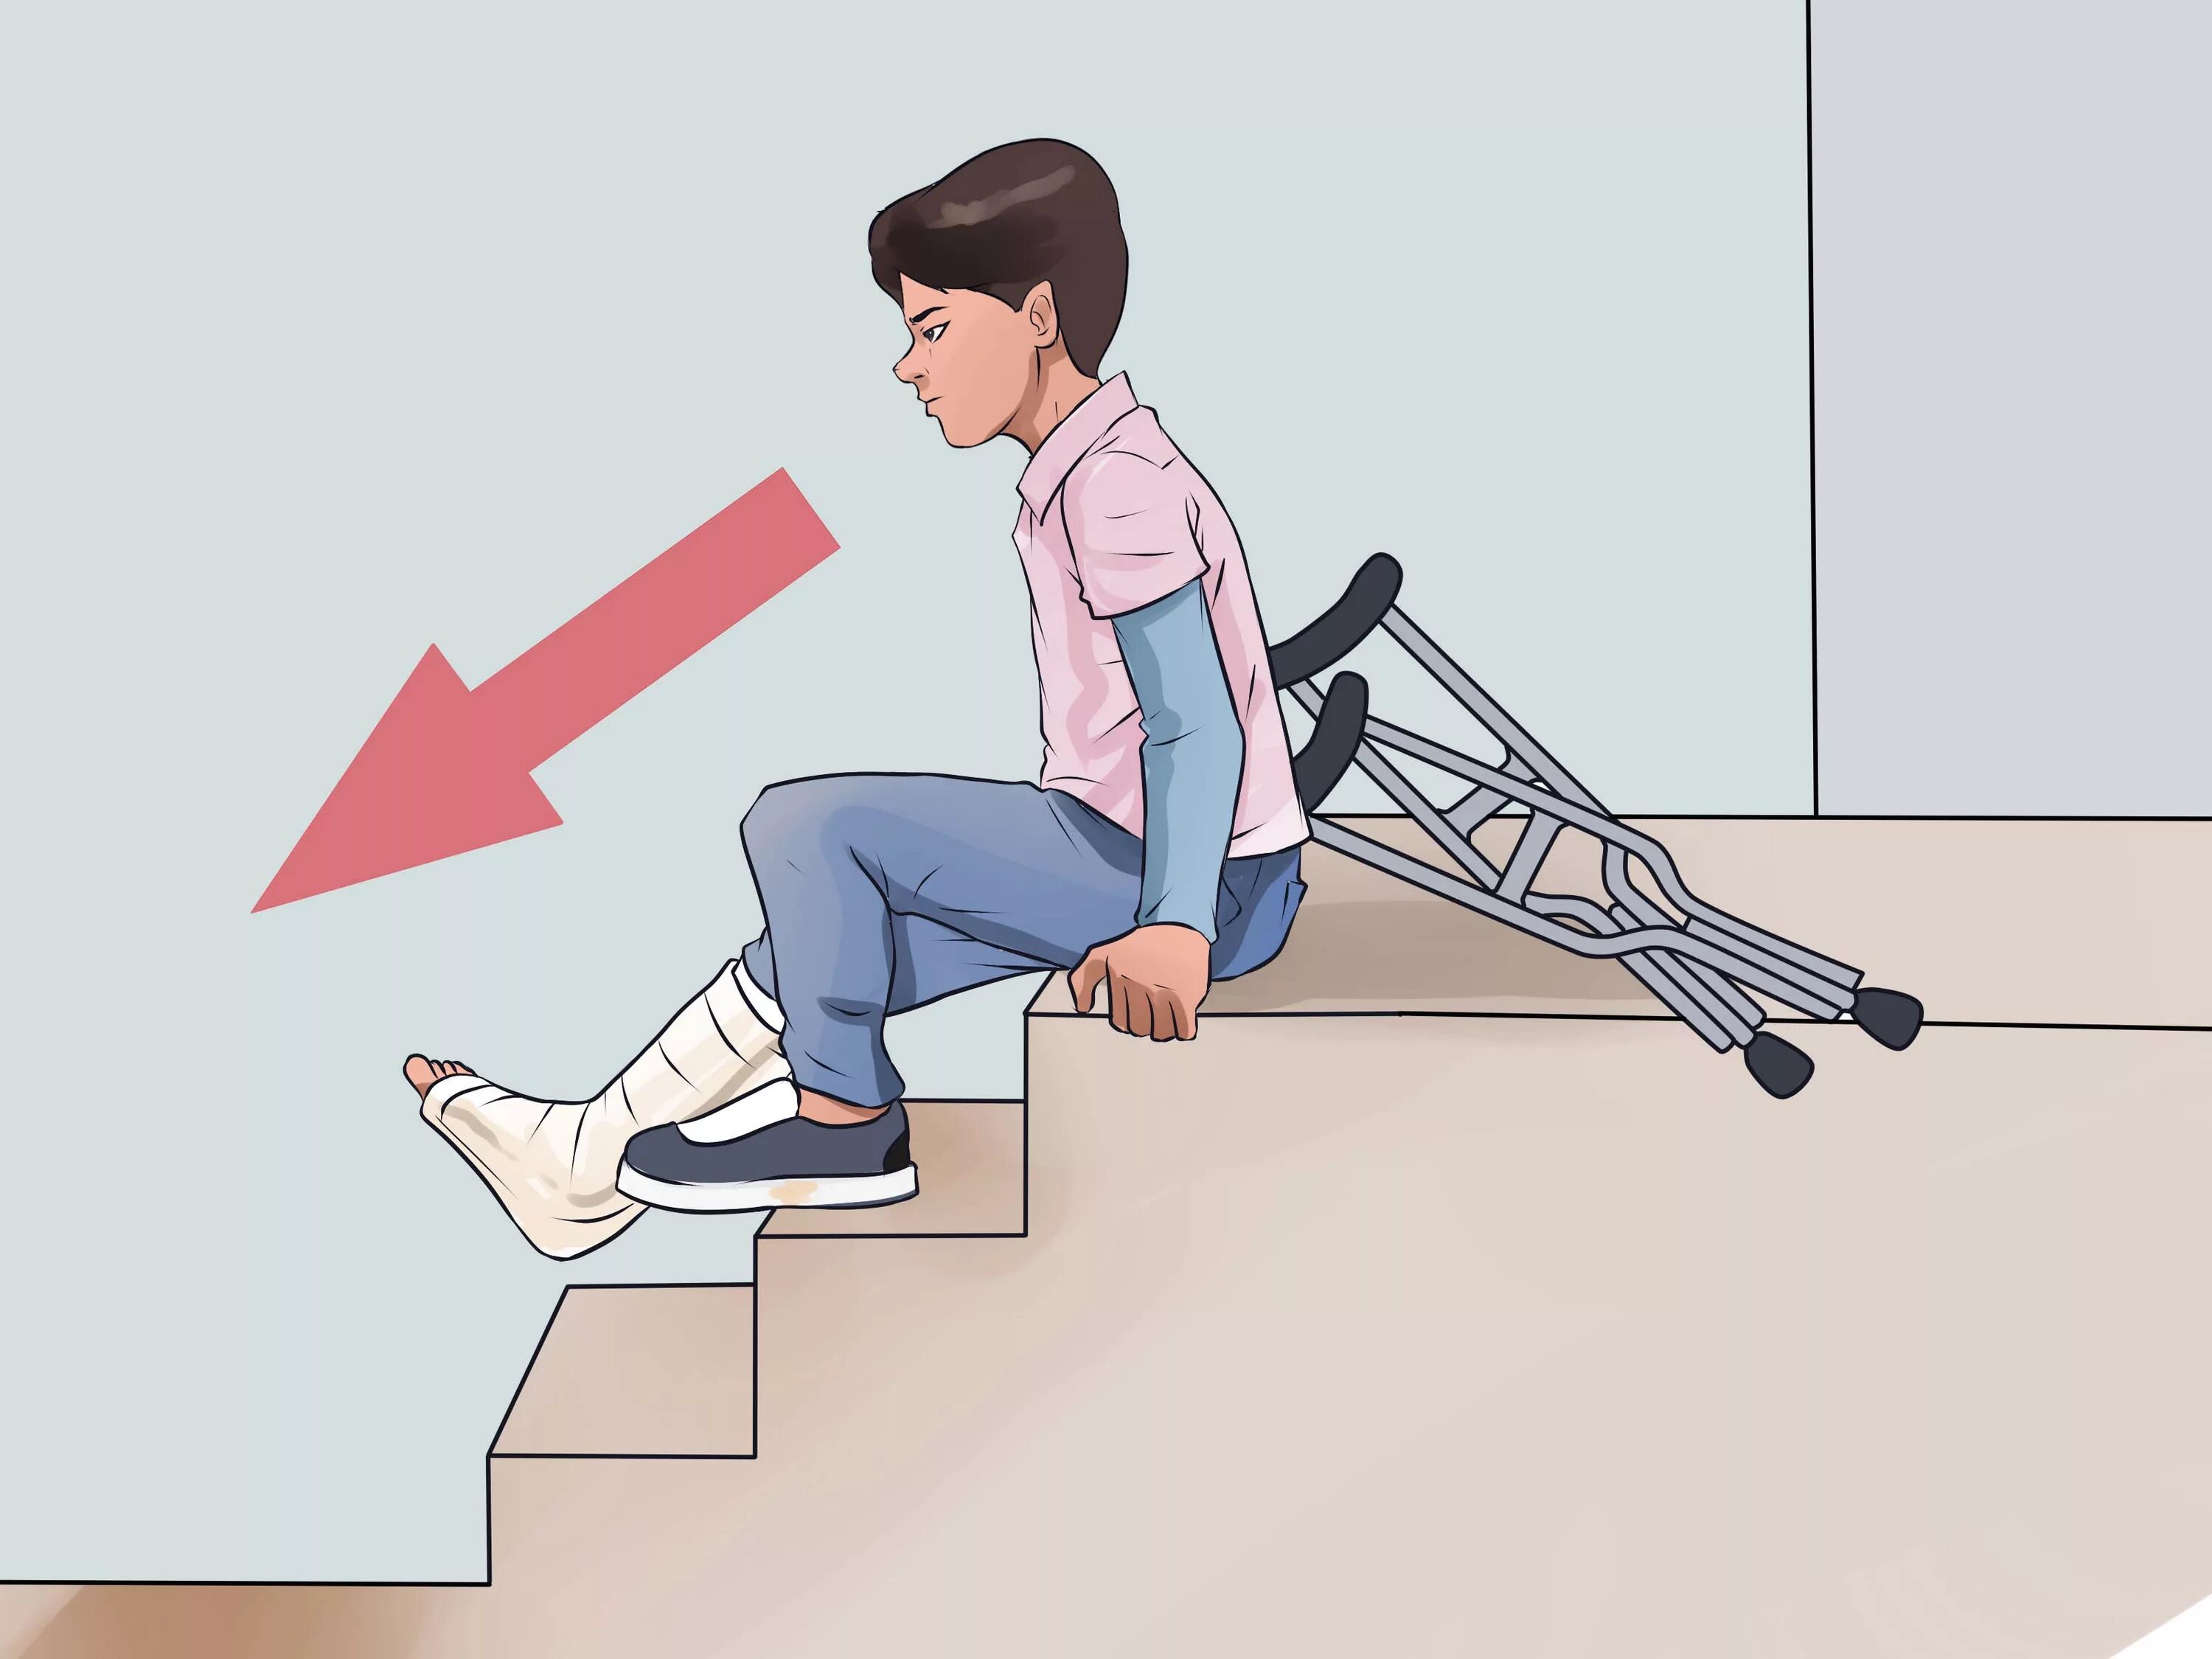 Тяжело подниматься по лестнице. Спуск по лестнице на костылях. Техника хождения на костылях по ступенькам. Ходьба на костылях по лестнице.